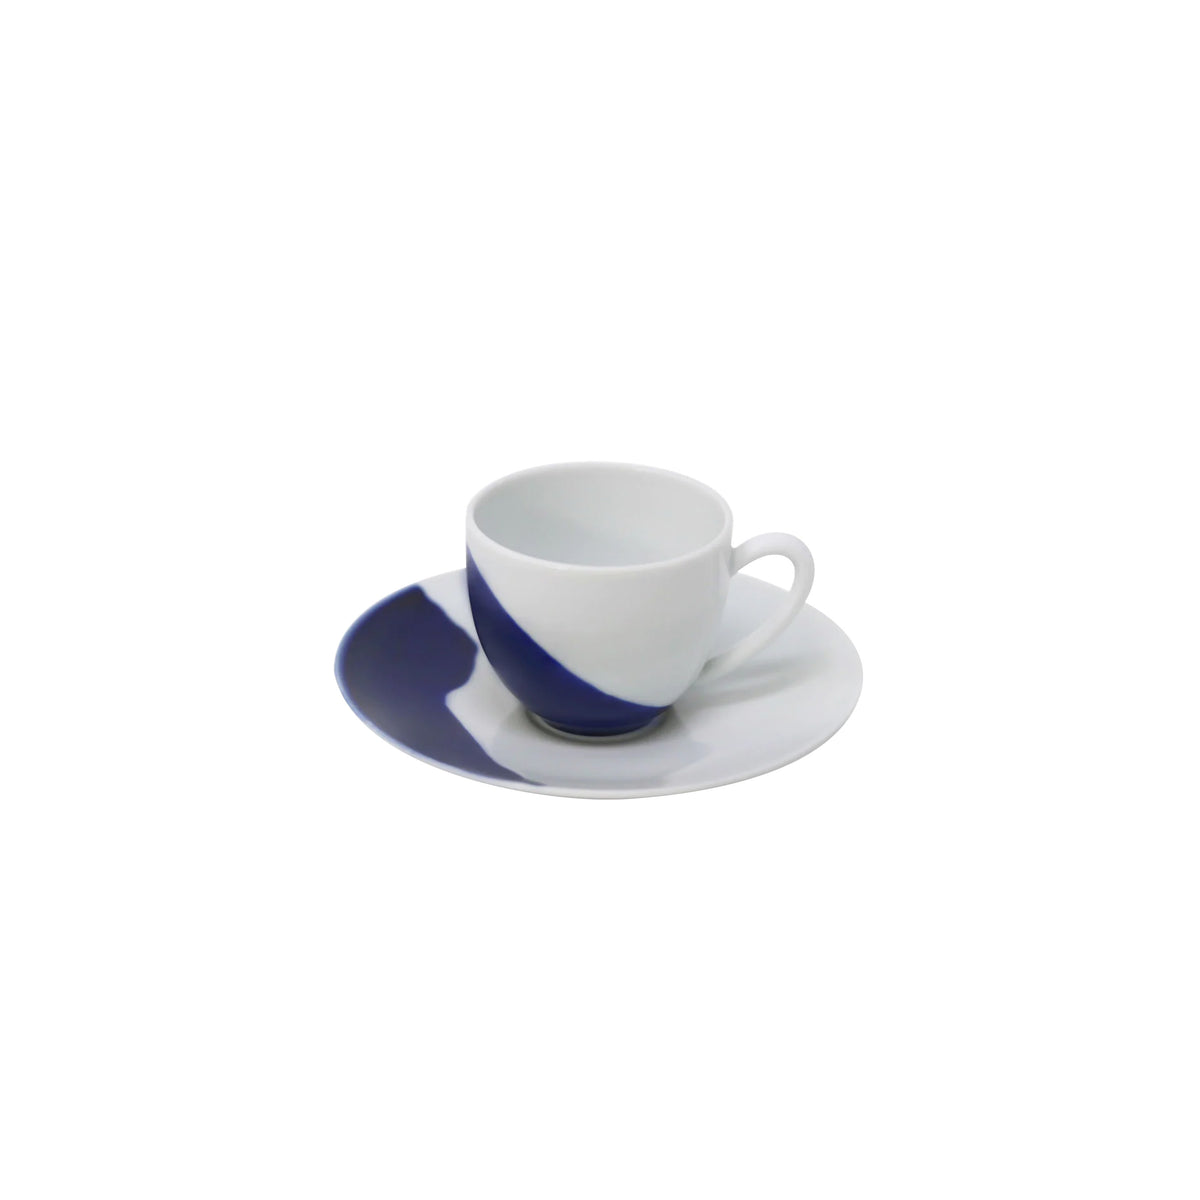 BLUE MYKONOS - Coffee set (cup & saucer)